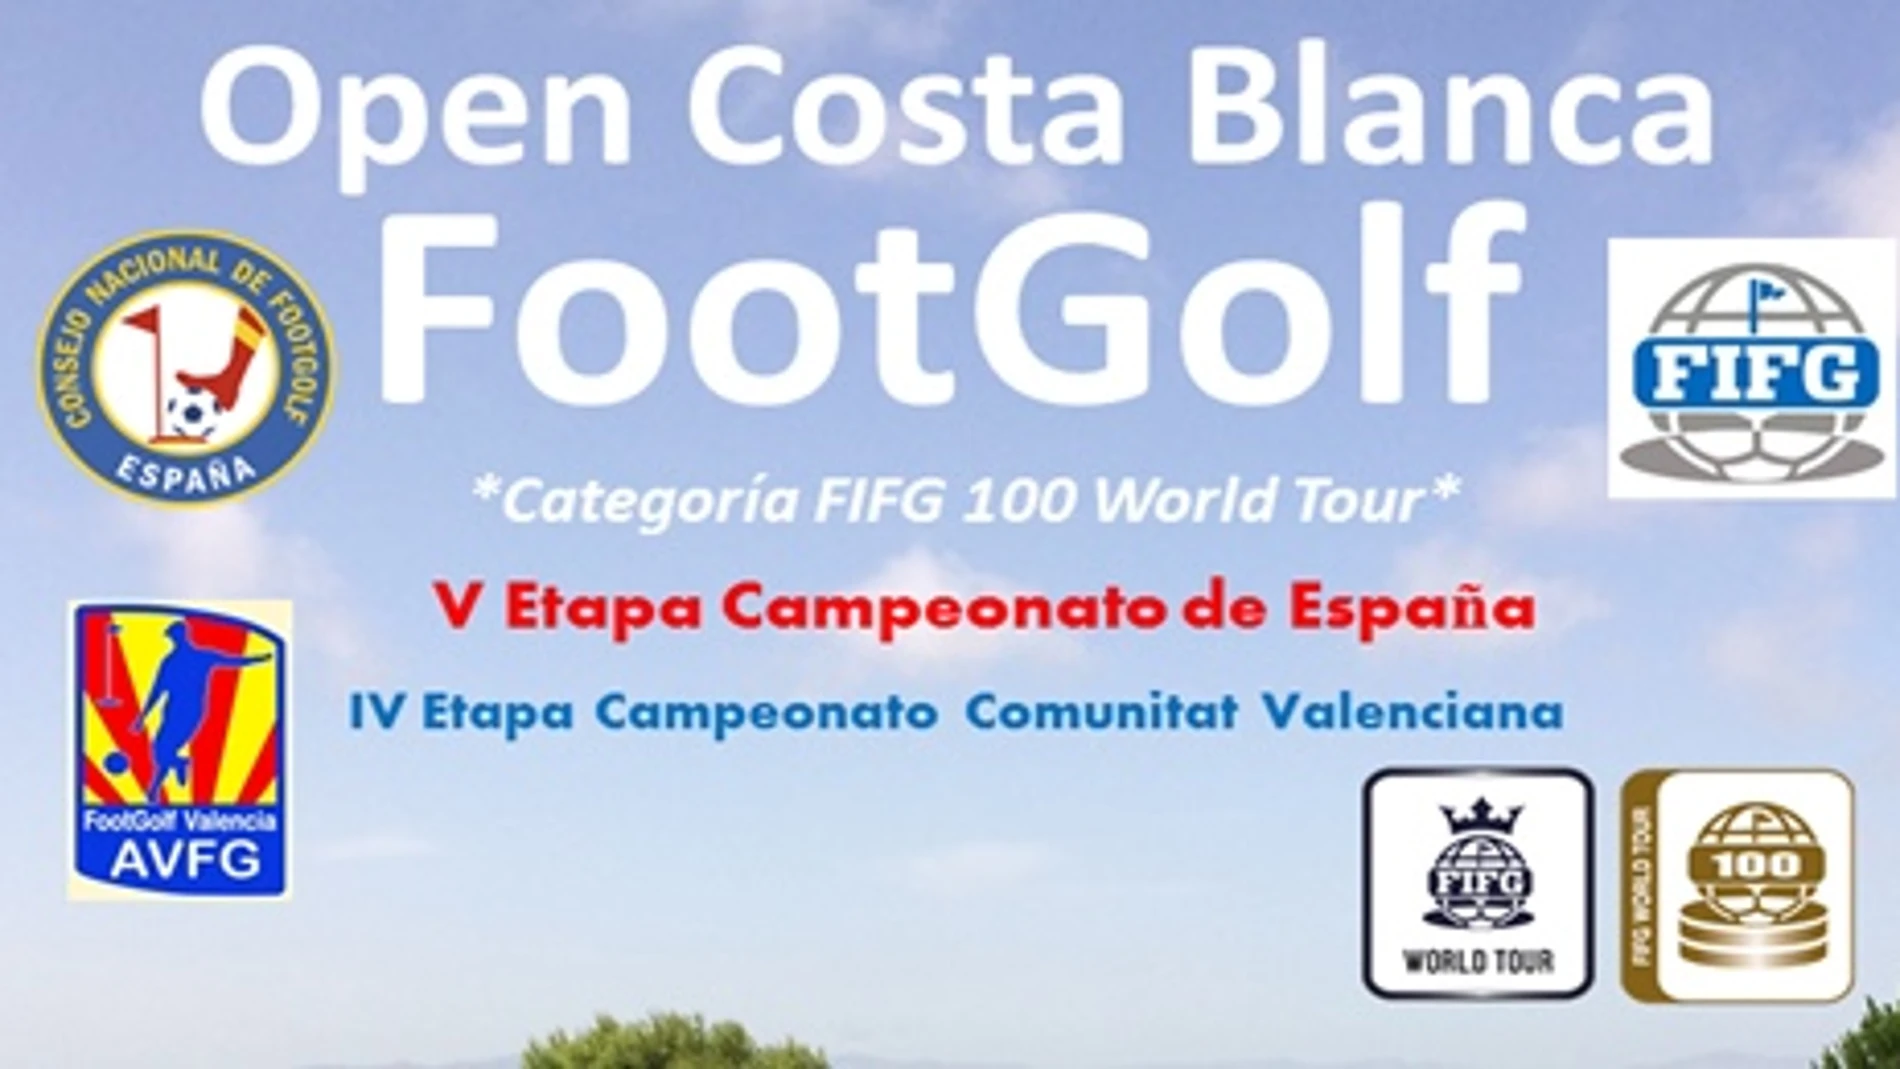 Open Costa Blanca footgolf